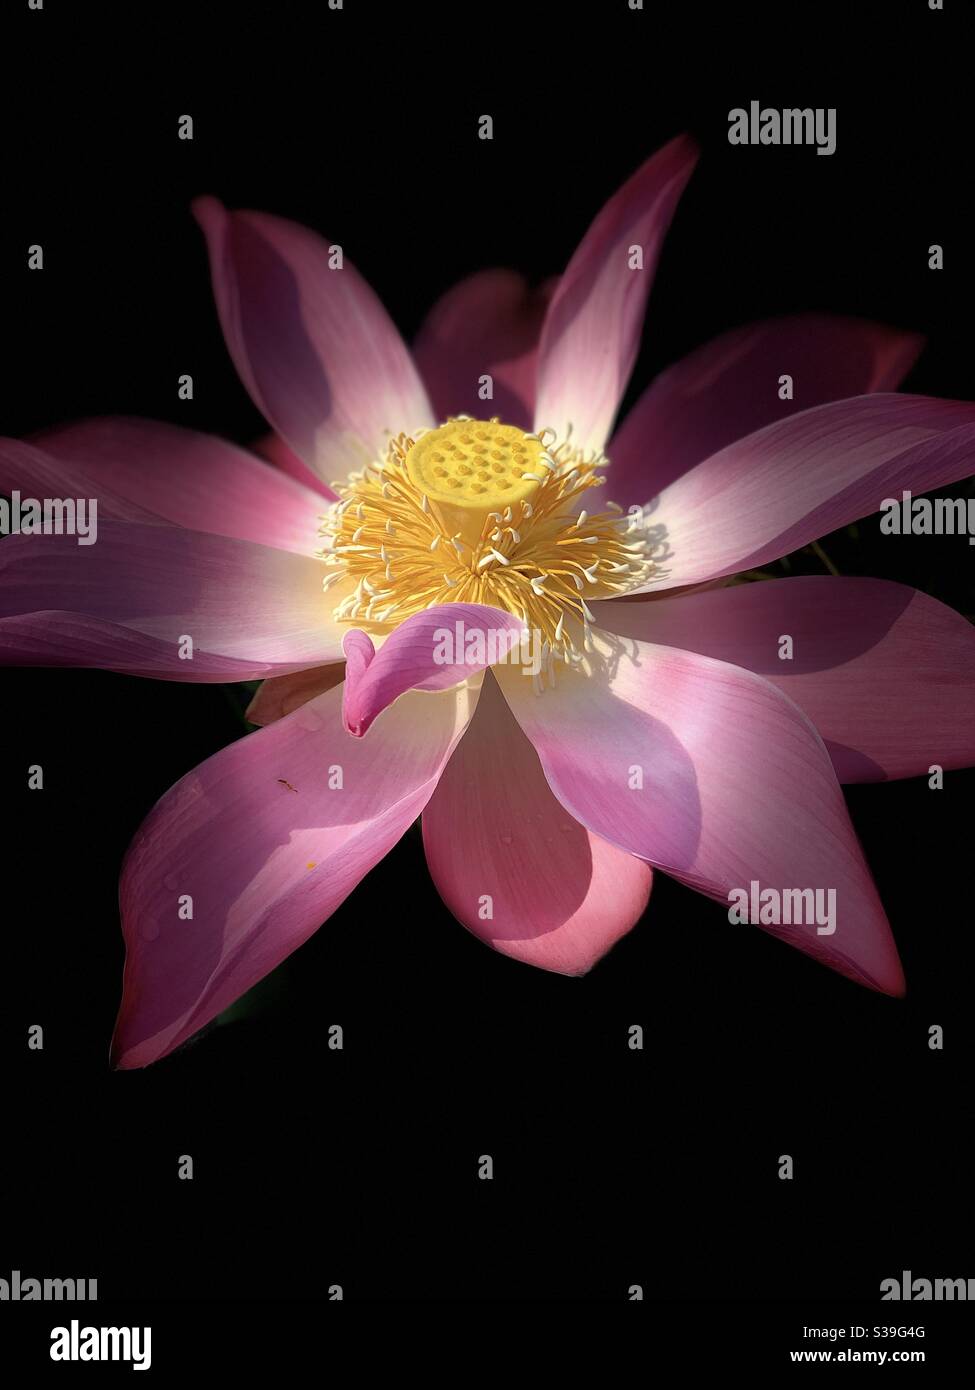 Lotus plant with stage light potrait mode Stock Photo